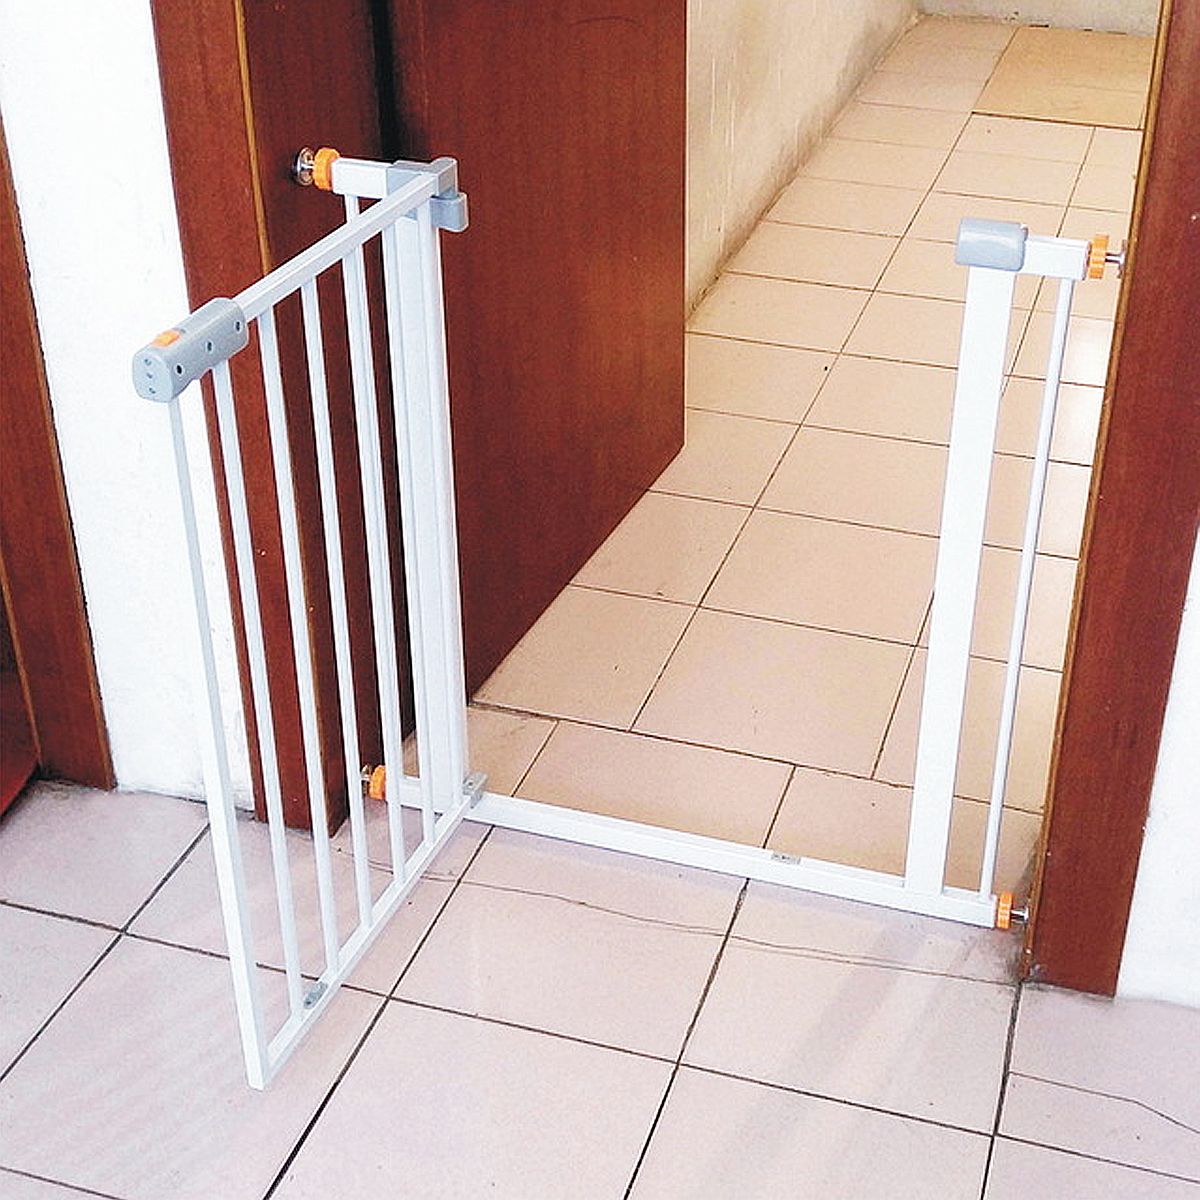 7578cm-Adjustable-Baby-Metal-Safety-Gates-Pet-Dog-Child-Door-Stair-Fence-Security-Barrier-Gate-1437427